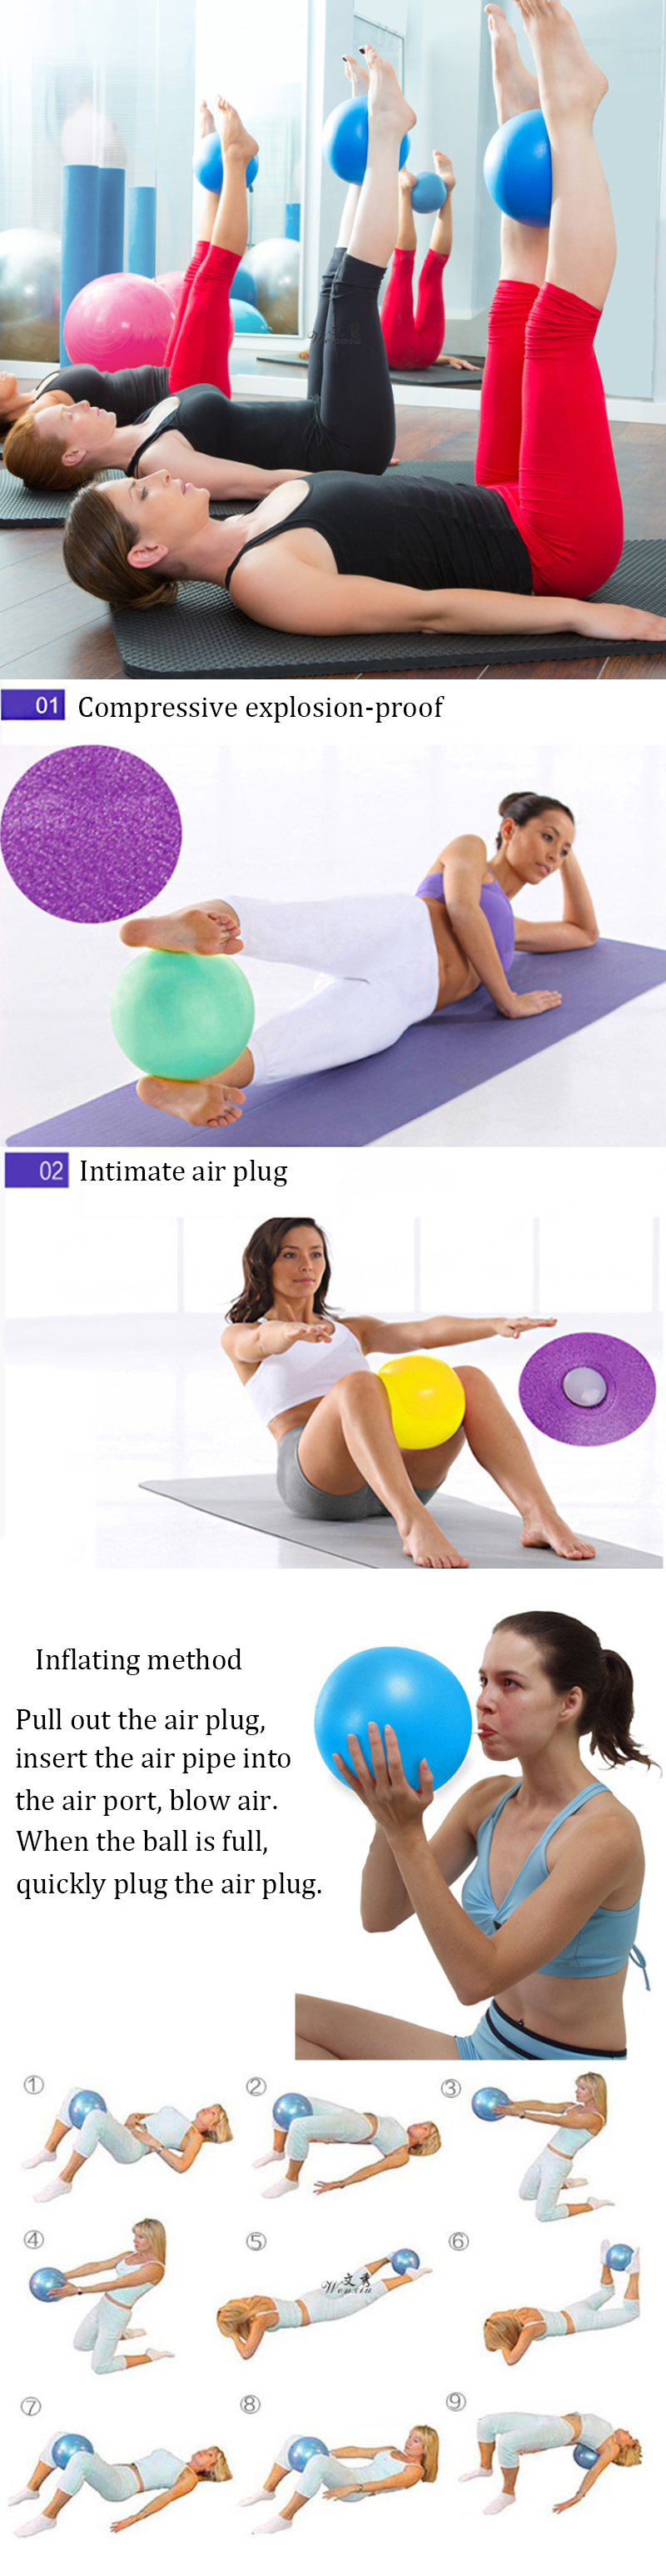 KALOAD-25cm-Yoga-Ball-Sports-Fitness-Core-Ball-Pilates-Balance-Ball-Massage-Ball-For-Slimming-Exerci-1405043